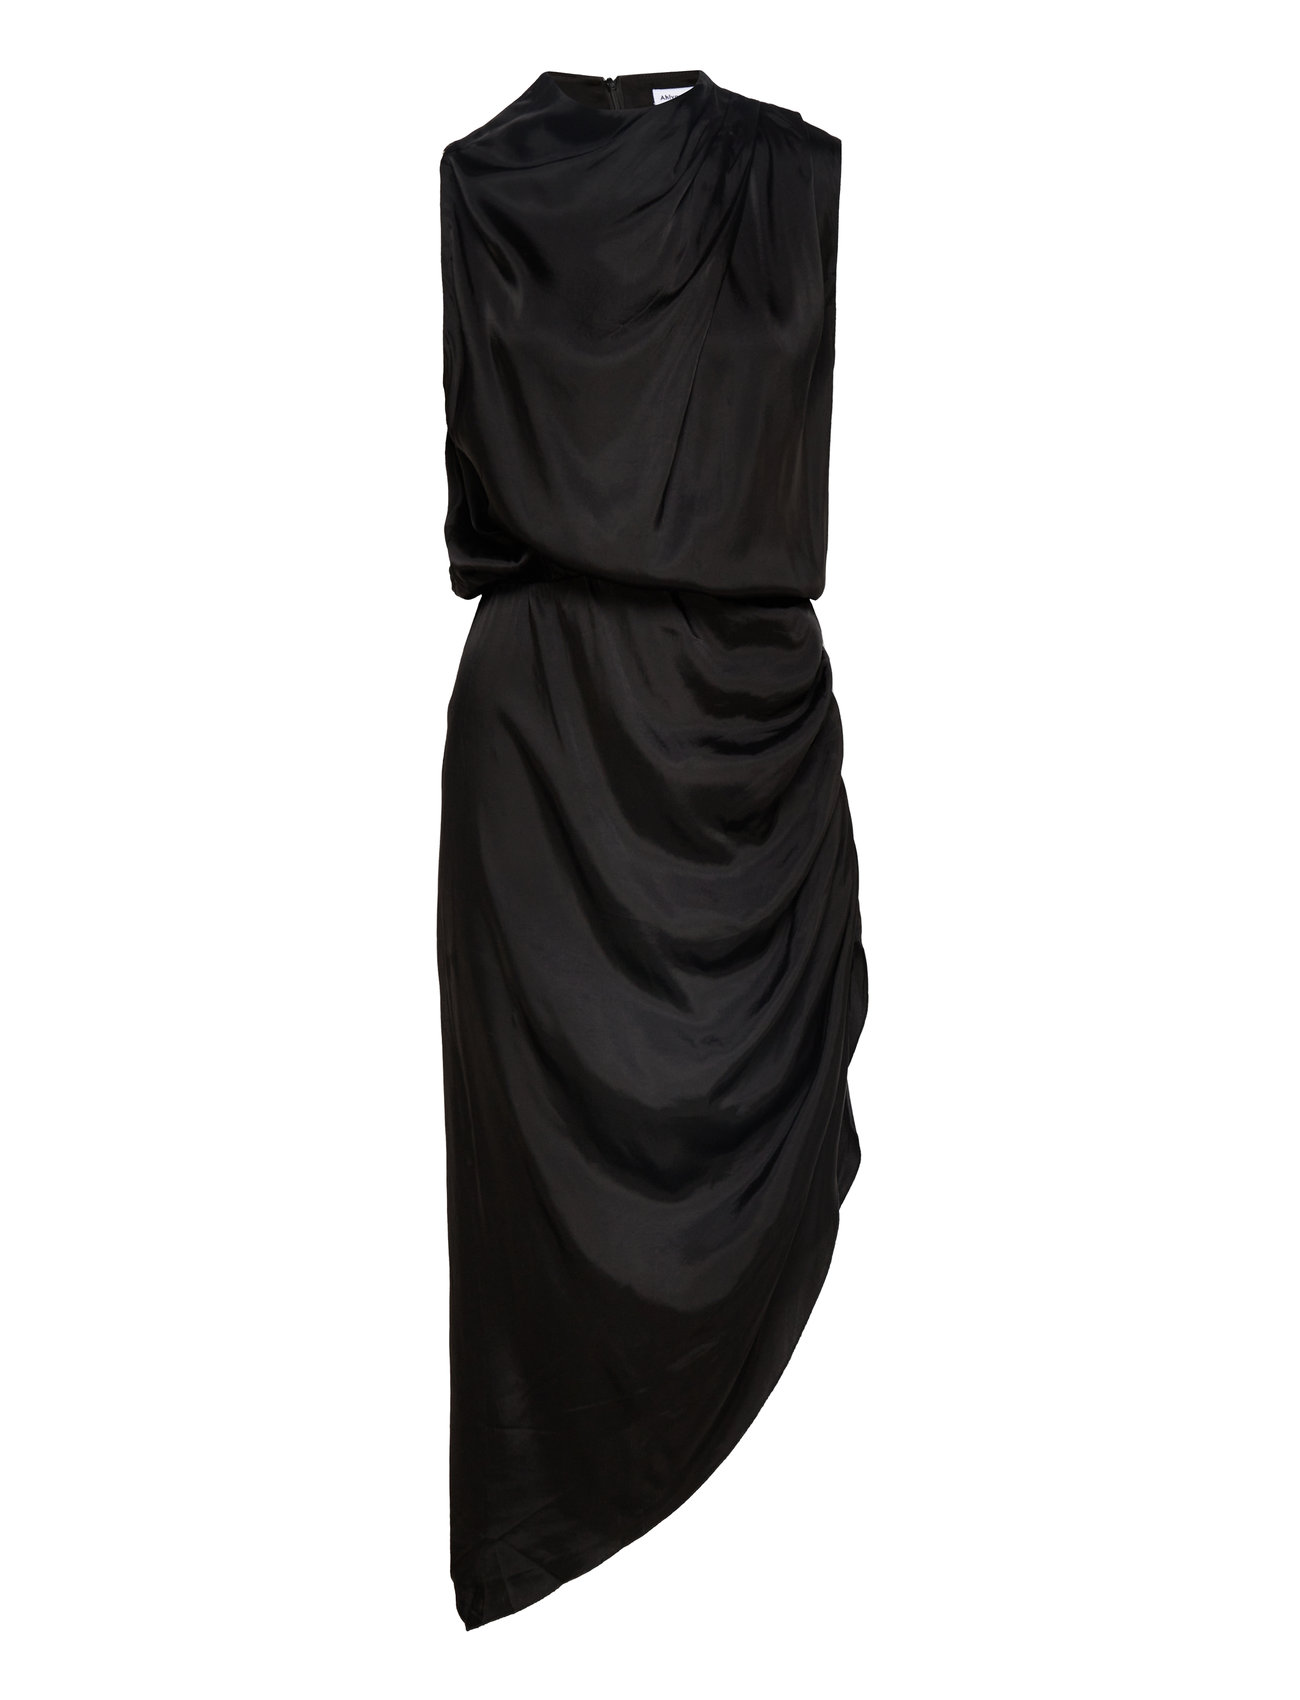 Ahlvar Gallery Tilda Dress - Midi dresses - Boozt.com